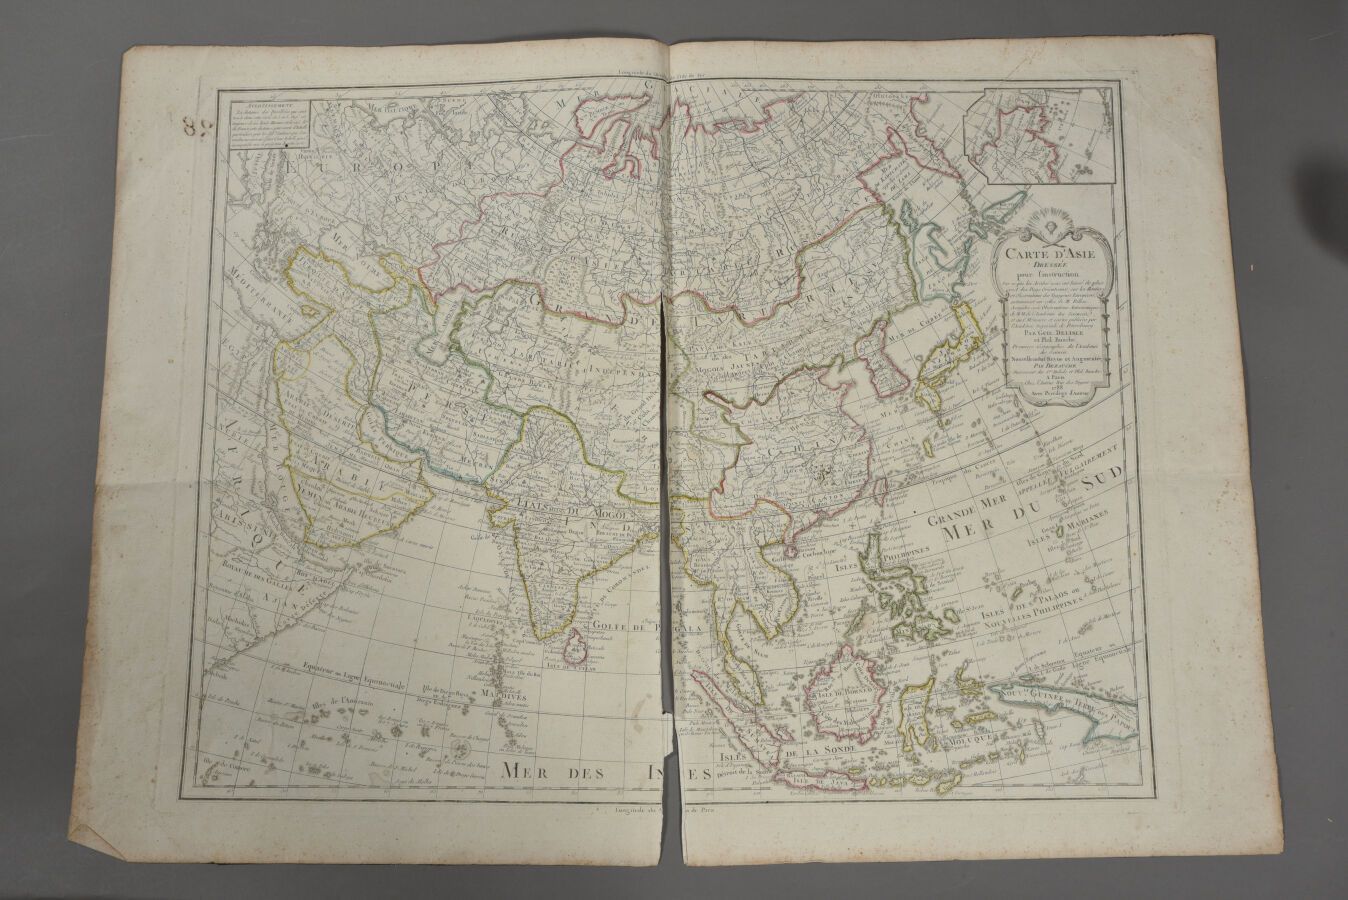 Null 纪尧姆-德利萨尔和他的继承人德佐赫
(法国，18世纪)
亚洲地图。1788.
双开本。 
在三分之二的标签上有破损。